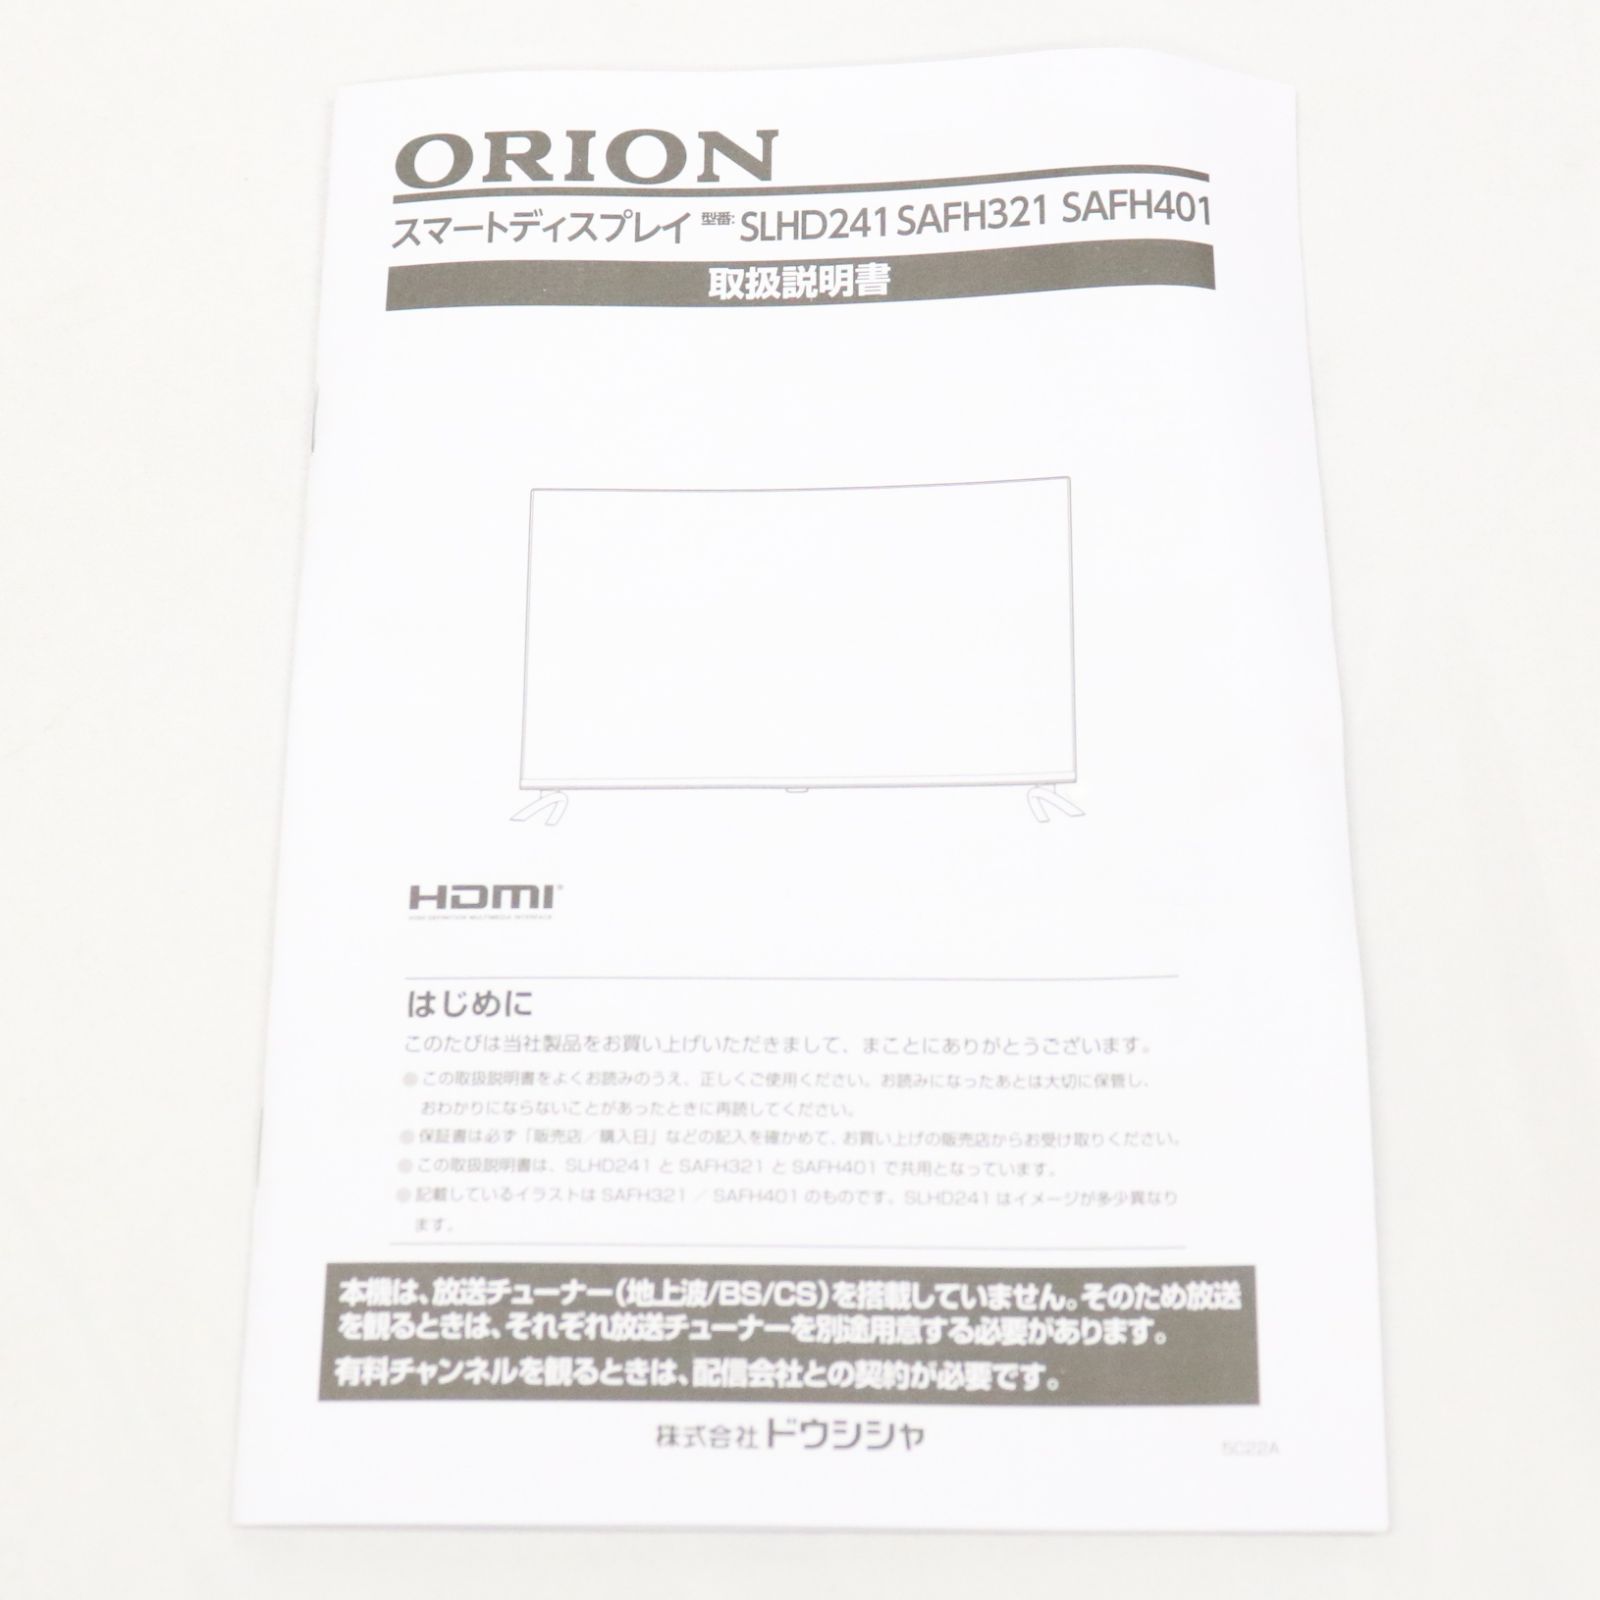 ORION SAFH321 BLACK